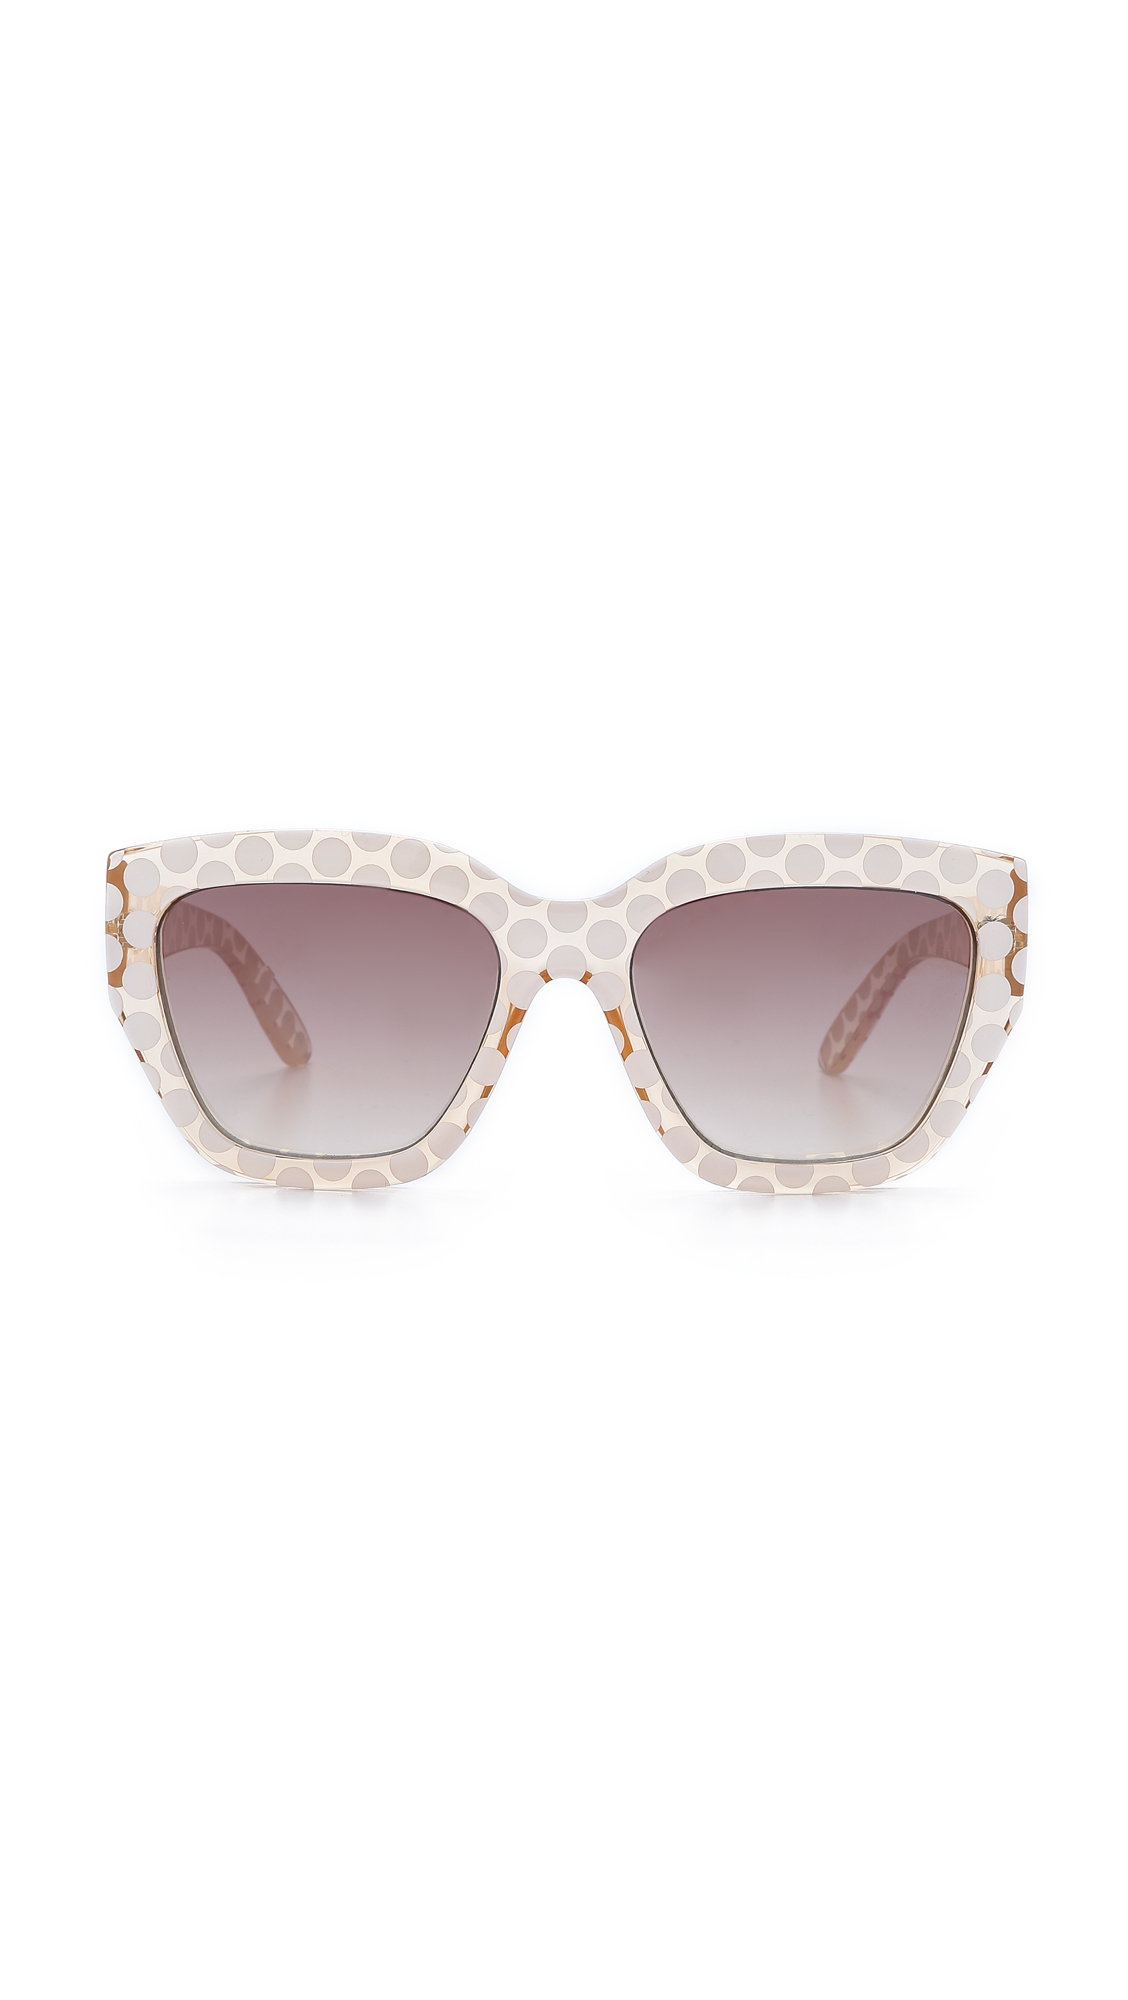 Le Specs Hermosa Sunglasses - Blonde & White Spot/brown - Lyst